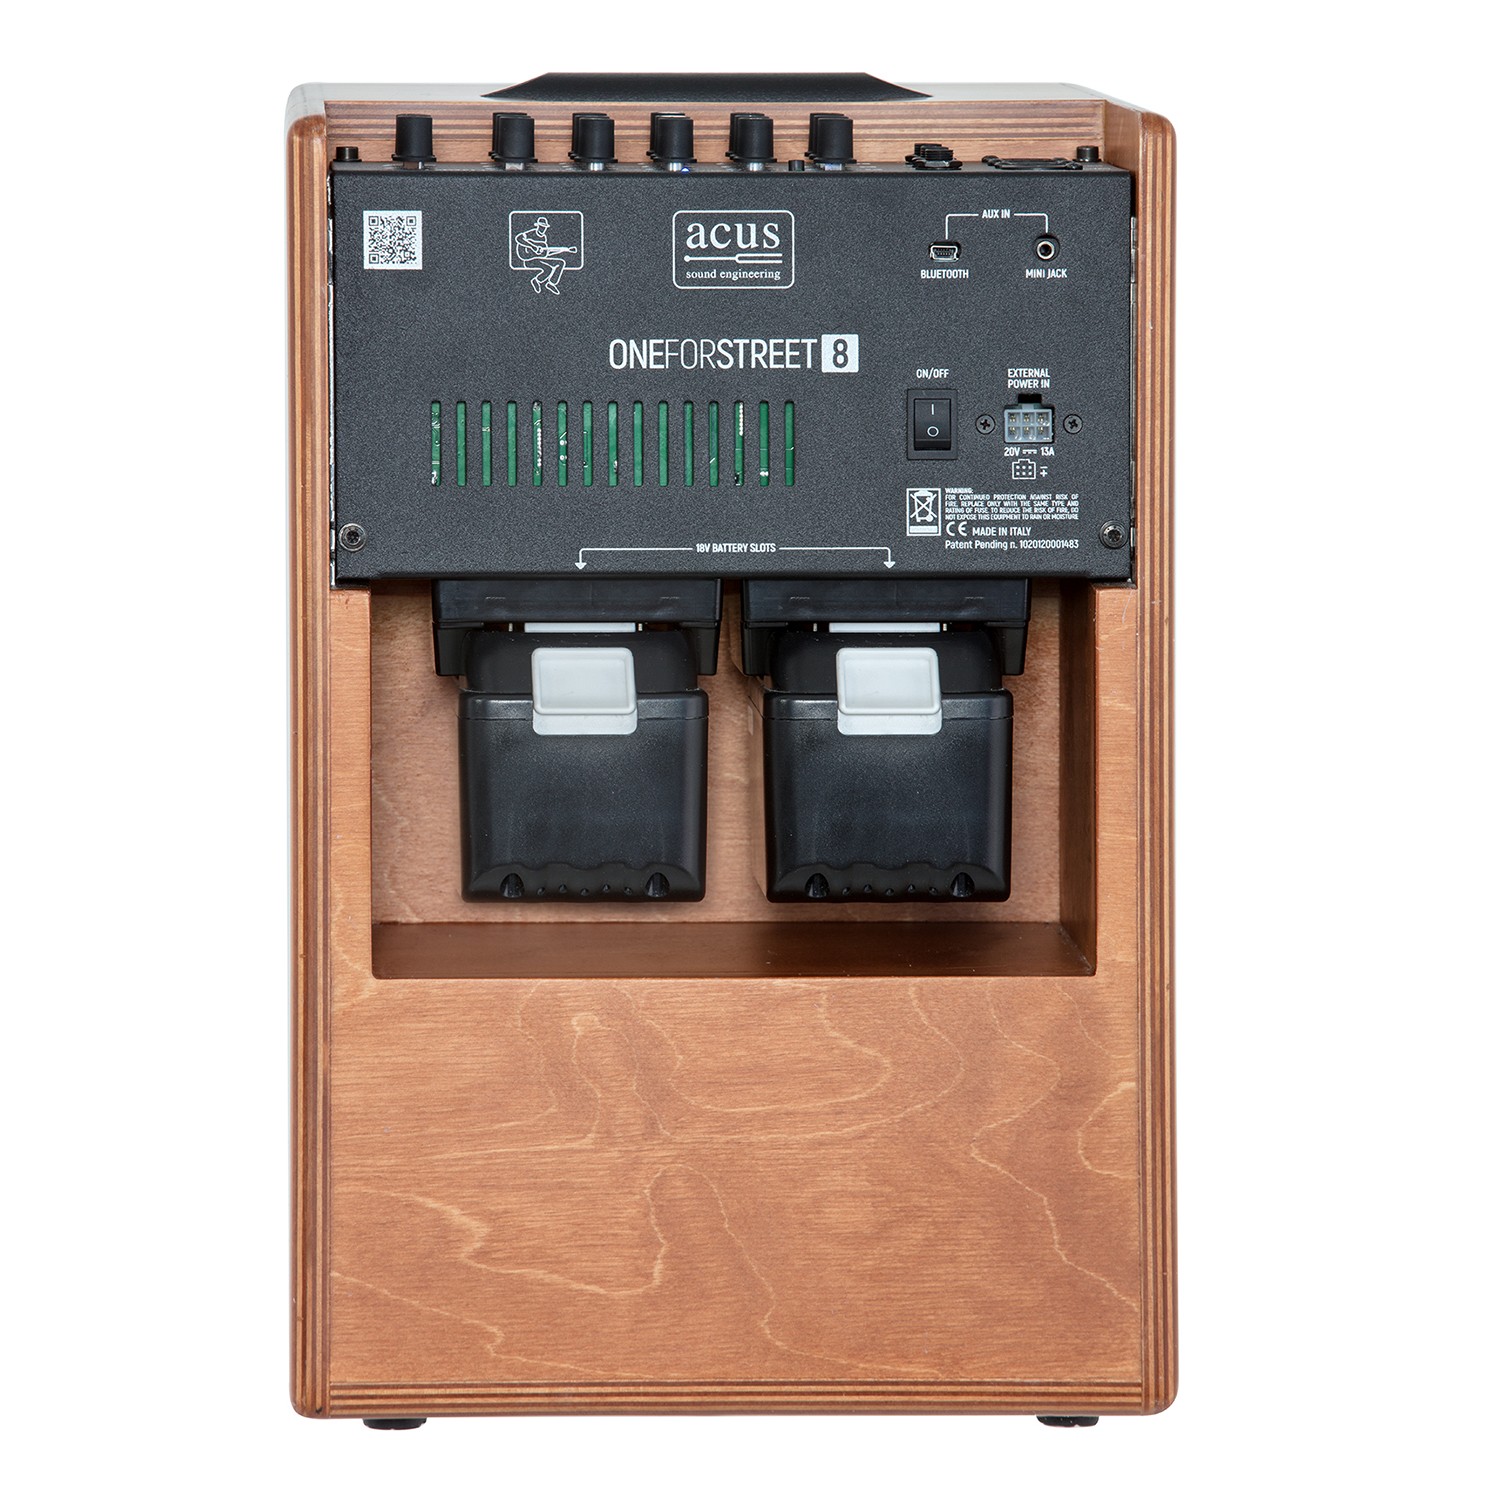 Acus Oneforstreet 8 Wood - Combo amplificador acústico - Variation 2